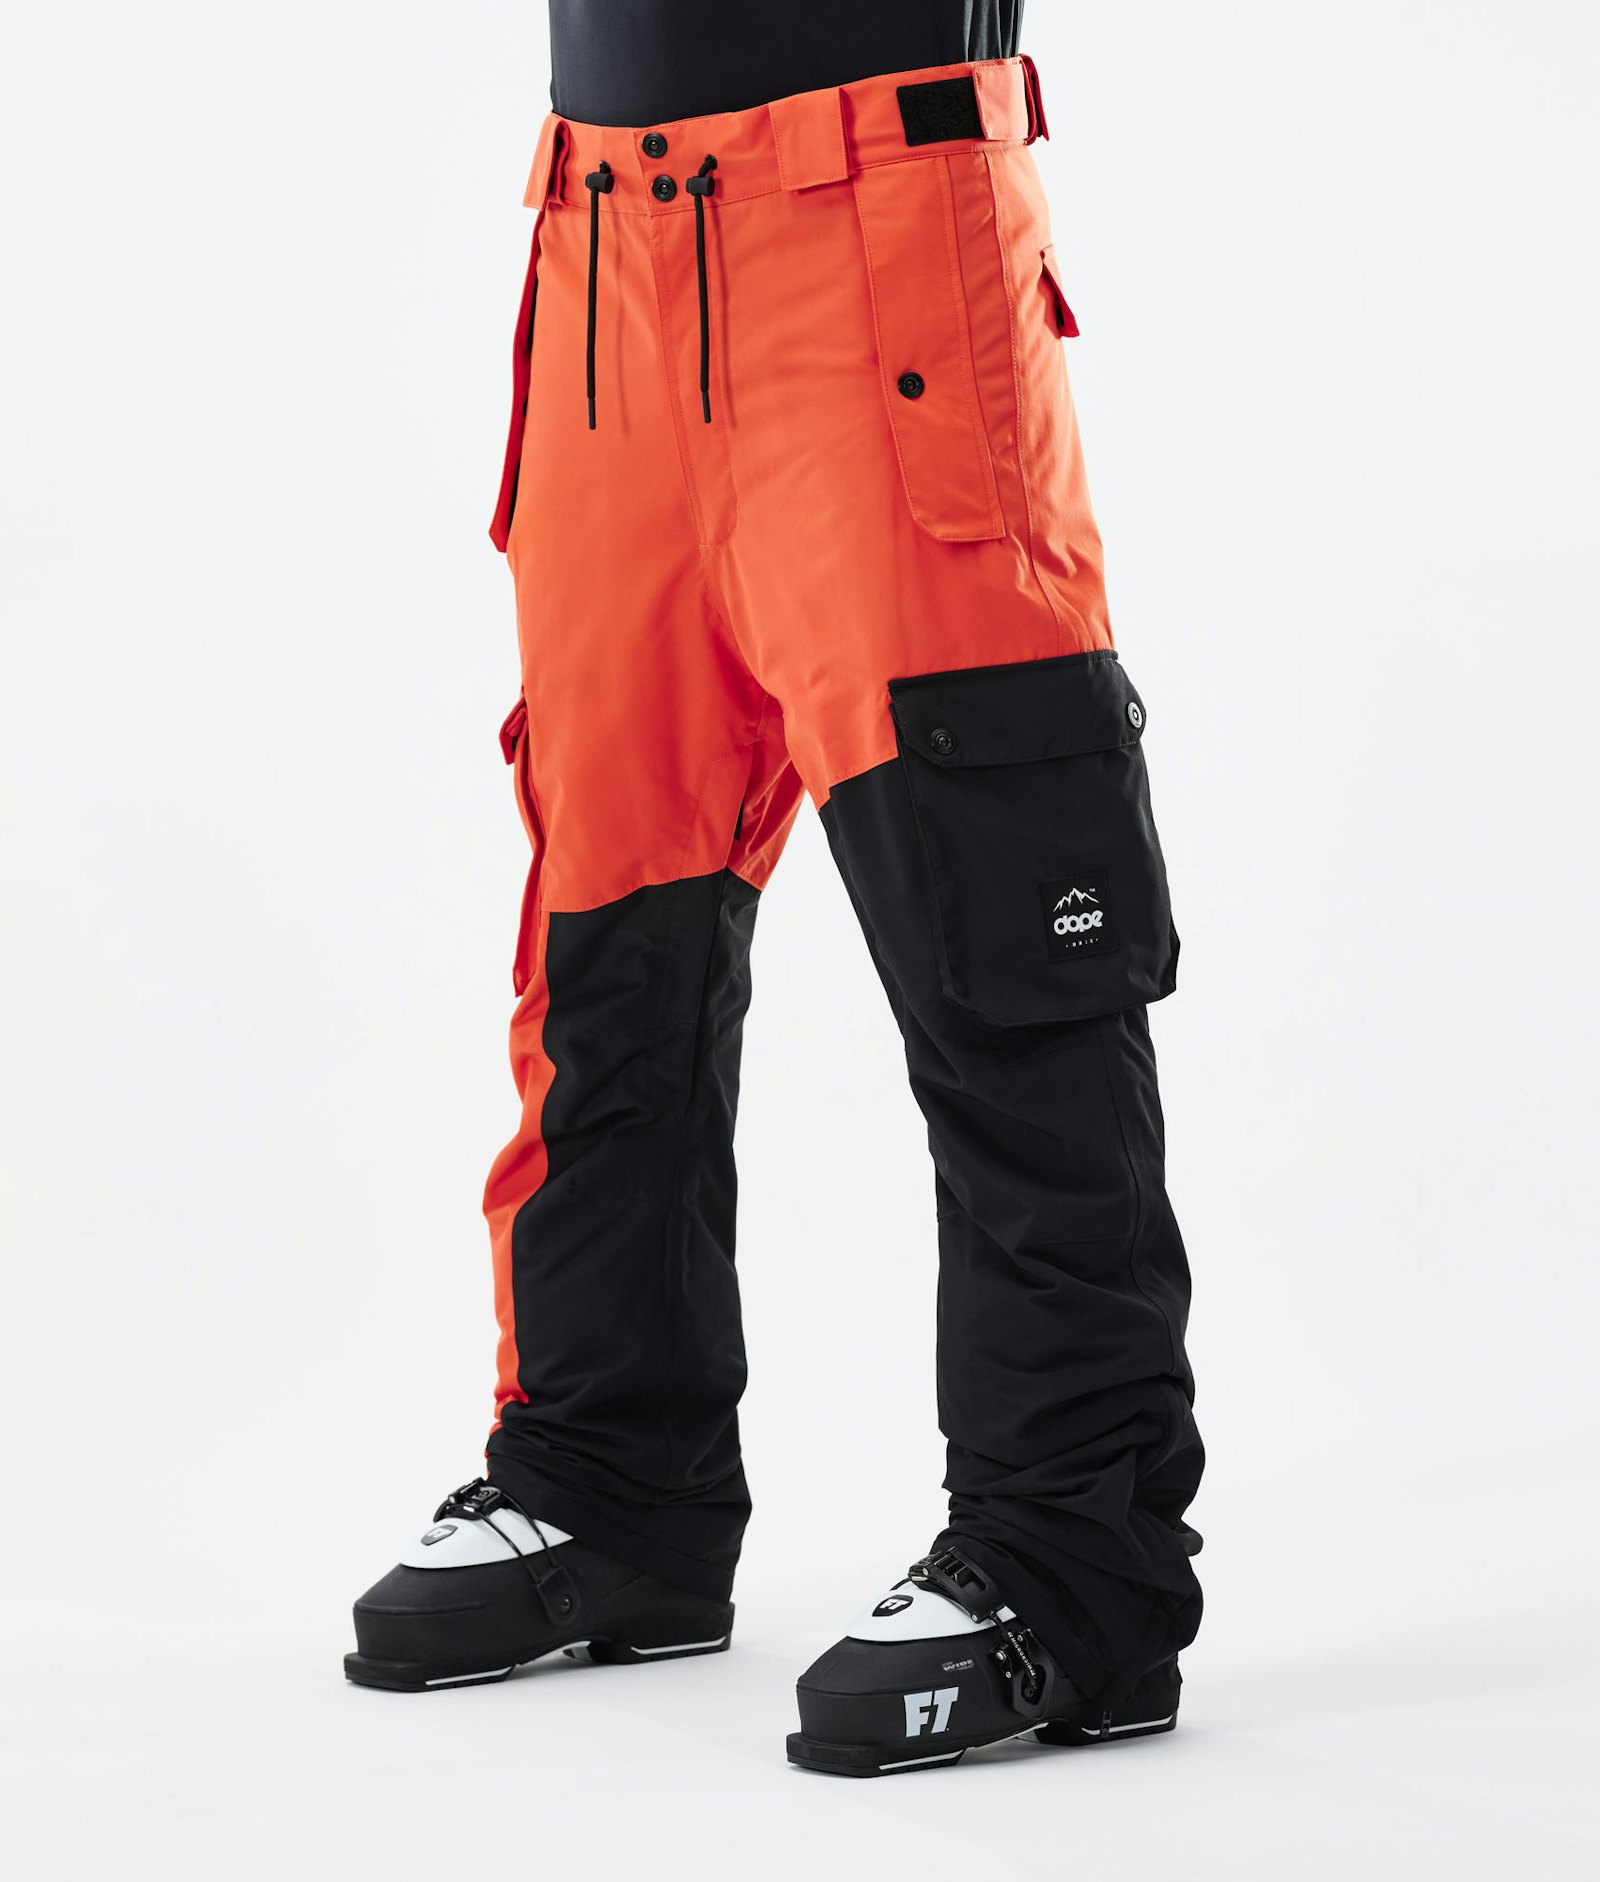 Dope Blizzard Men's Snowboard Pants Black